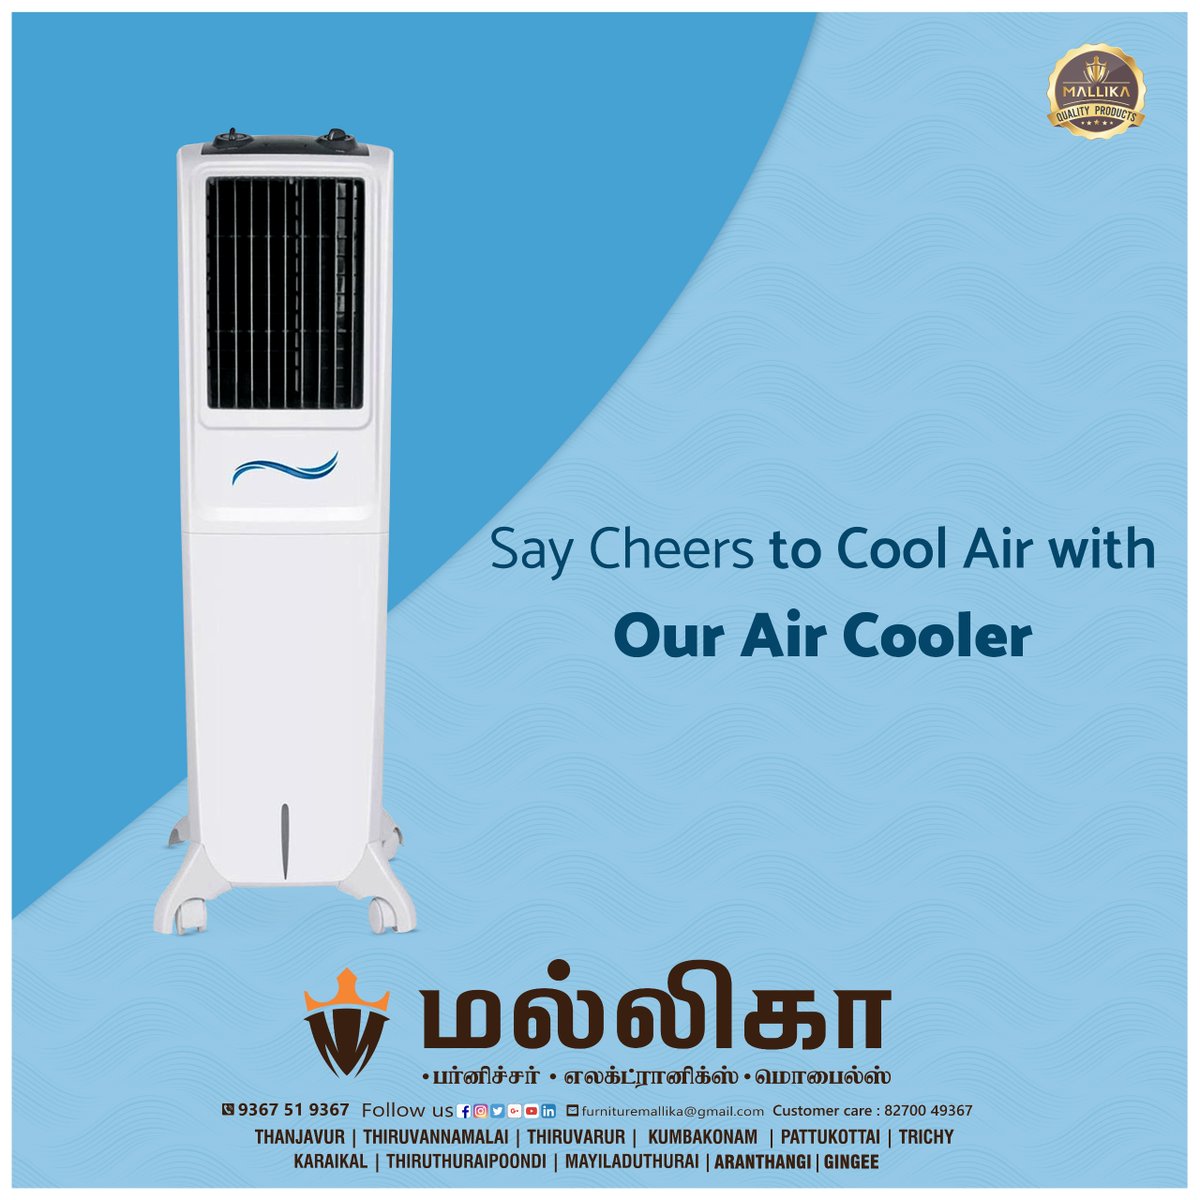 Say Cheers to Cool Air with Our Air Cooler...
#aircooler 
Mallika Furniture, Electronics & Mobiles
82700 49367
9367 51 9367
THANJAVUR | THIRUVANNAMALAI | THIRUVARUR | KUMBAKONAM | PATTUKOTTAI | TRICHY | KARAIKAL | THIRUTHURAIPOONDI | MAYILADUTHURAI | ARANTHANGI | GINGEE
#Mallika